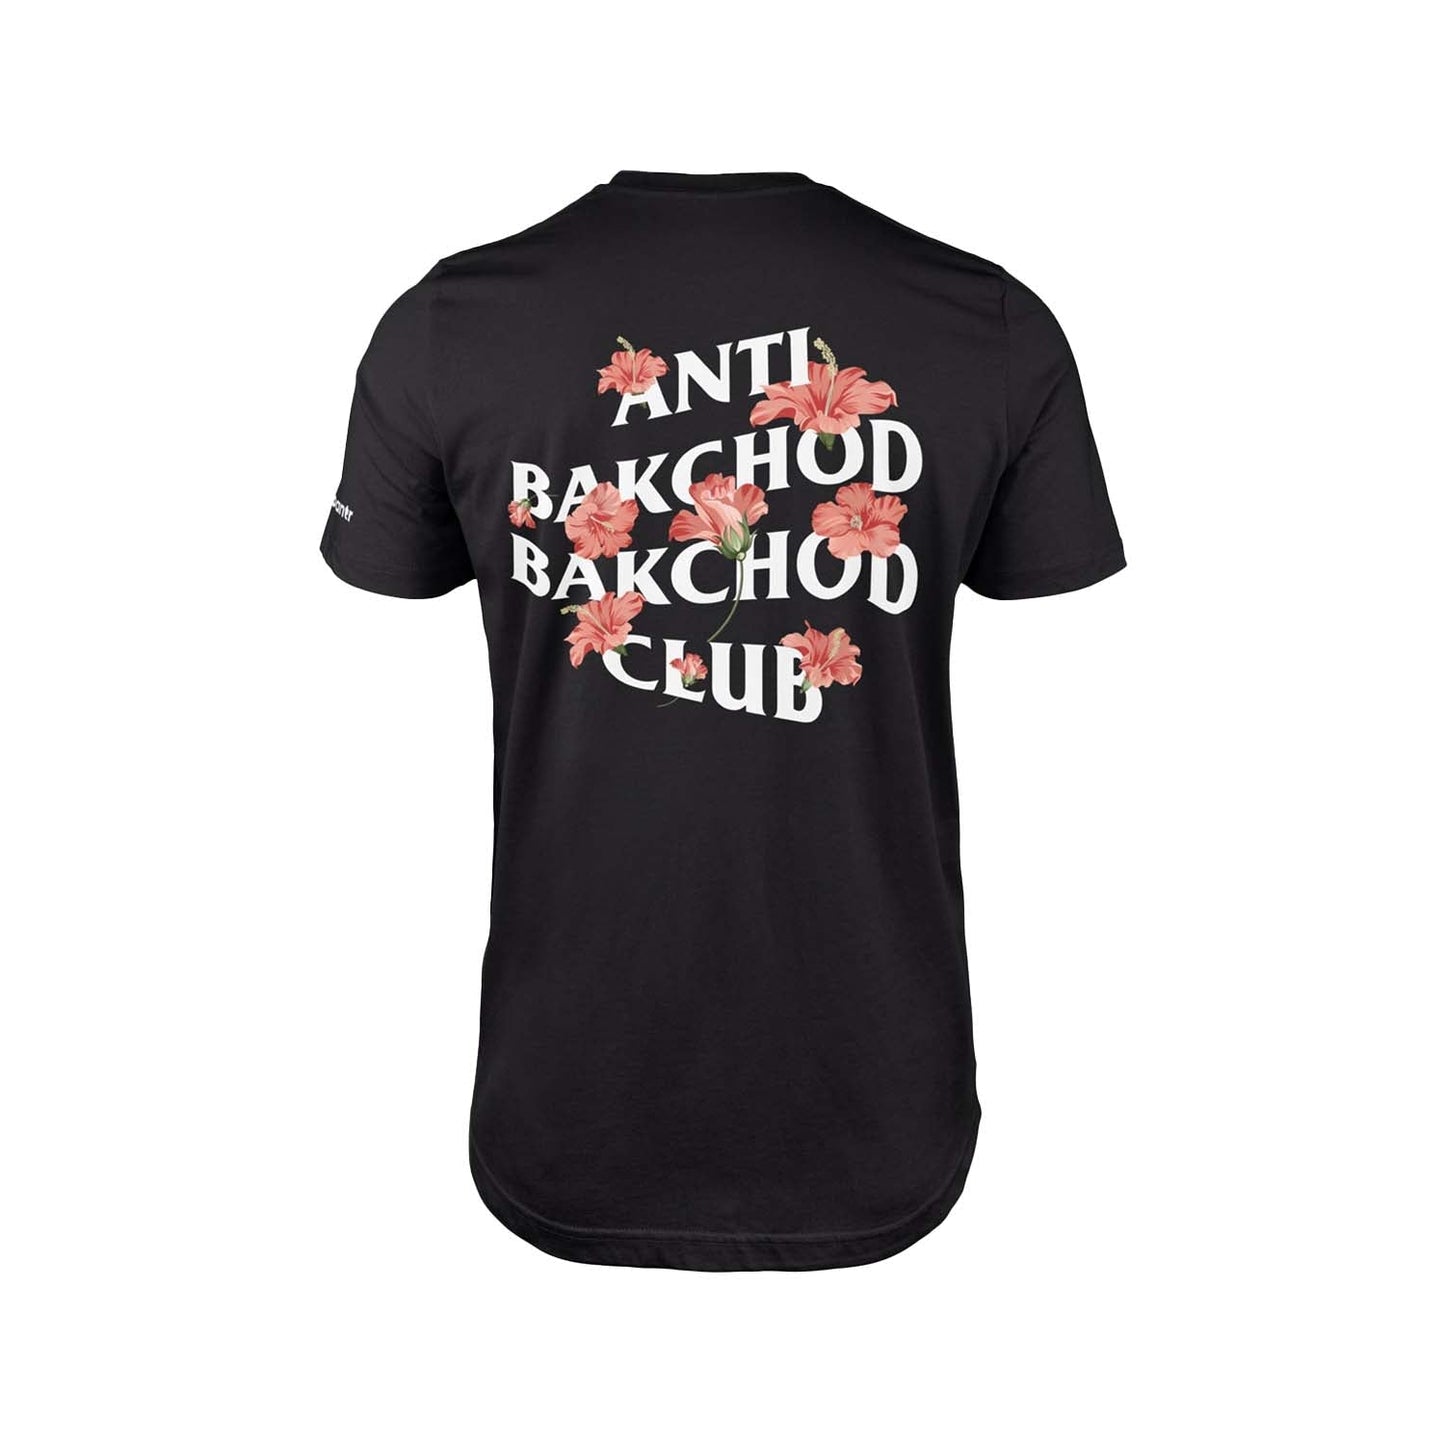 Bazarville BV Design Anti Bakchod Bakchod Club Black